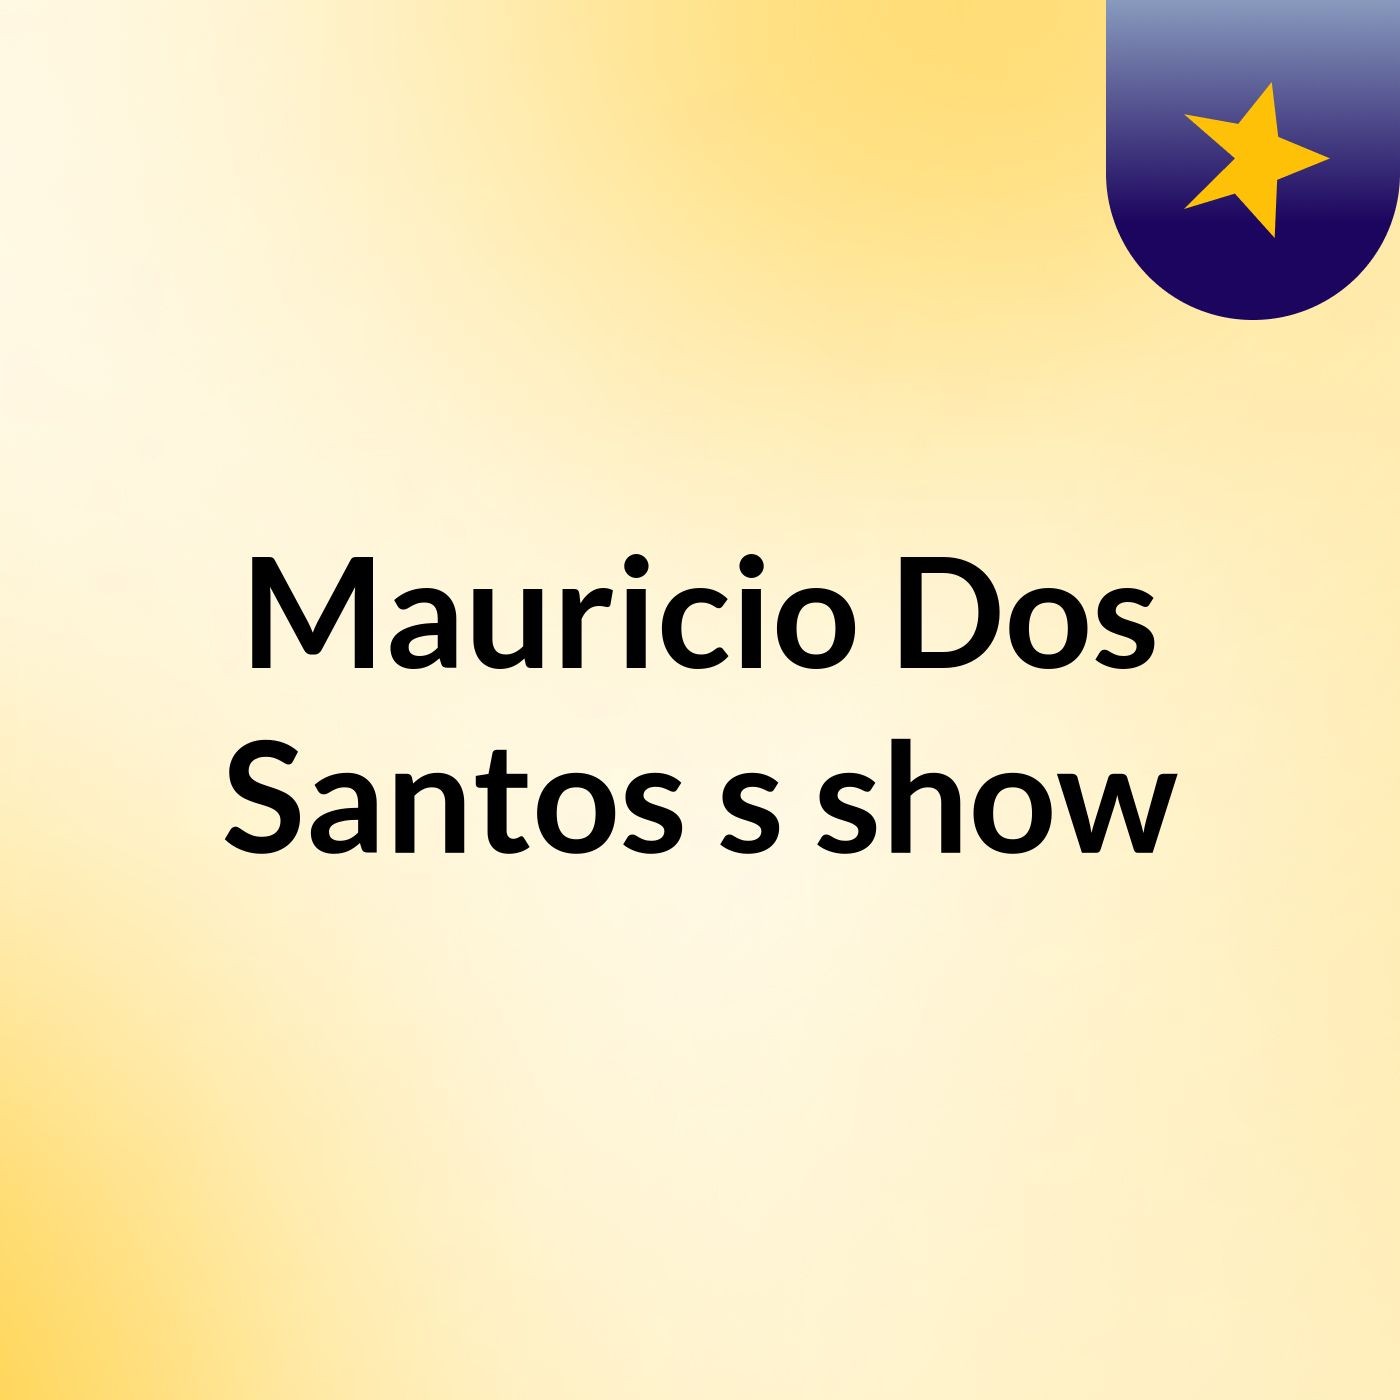 Mauricio Dos Santos's show